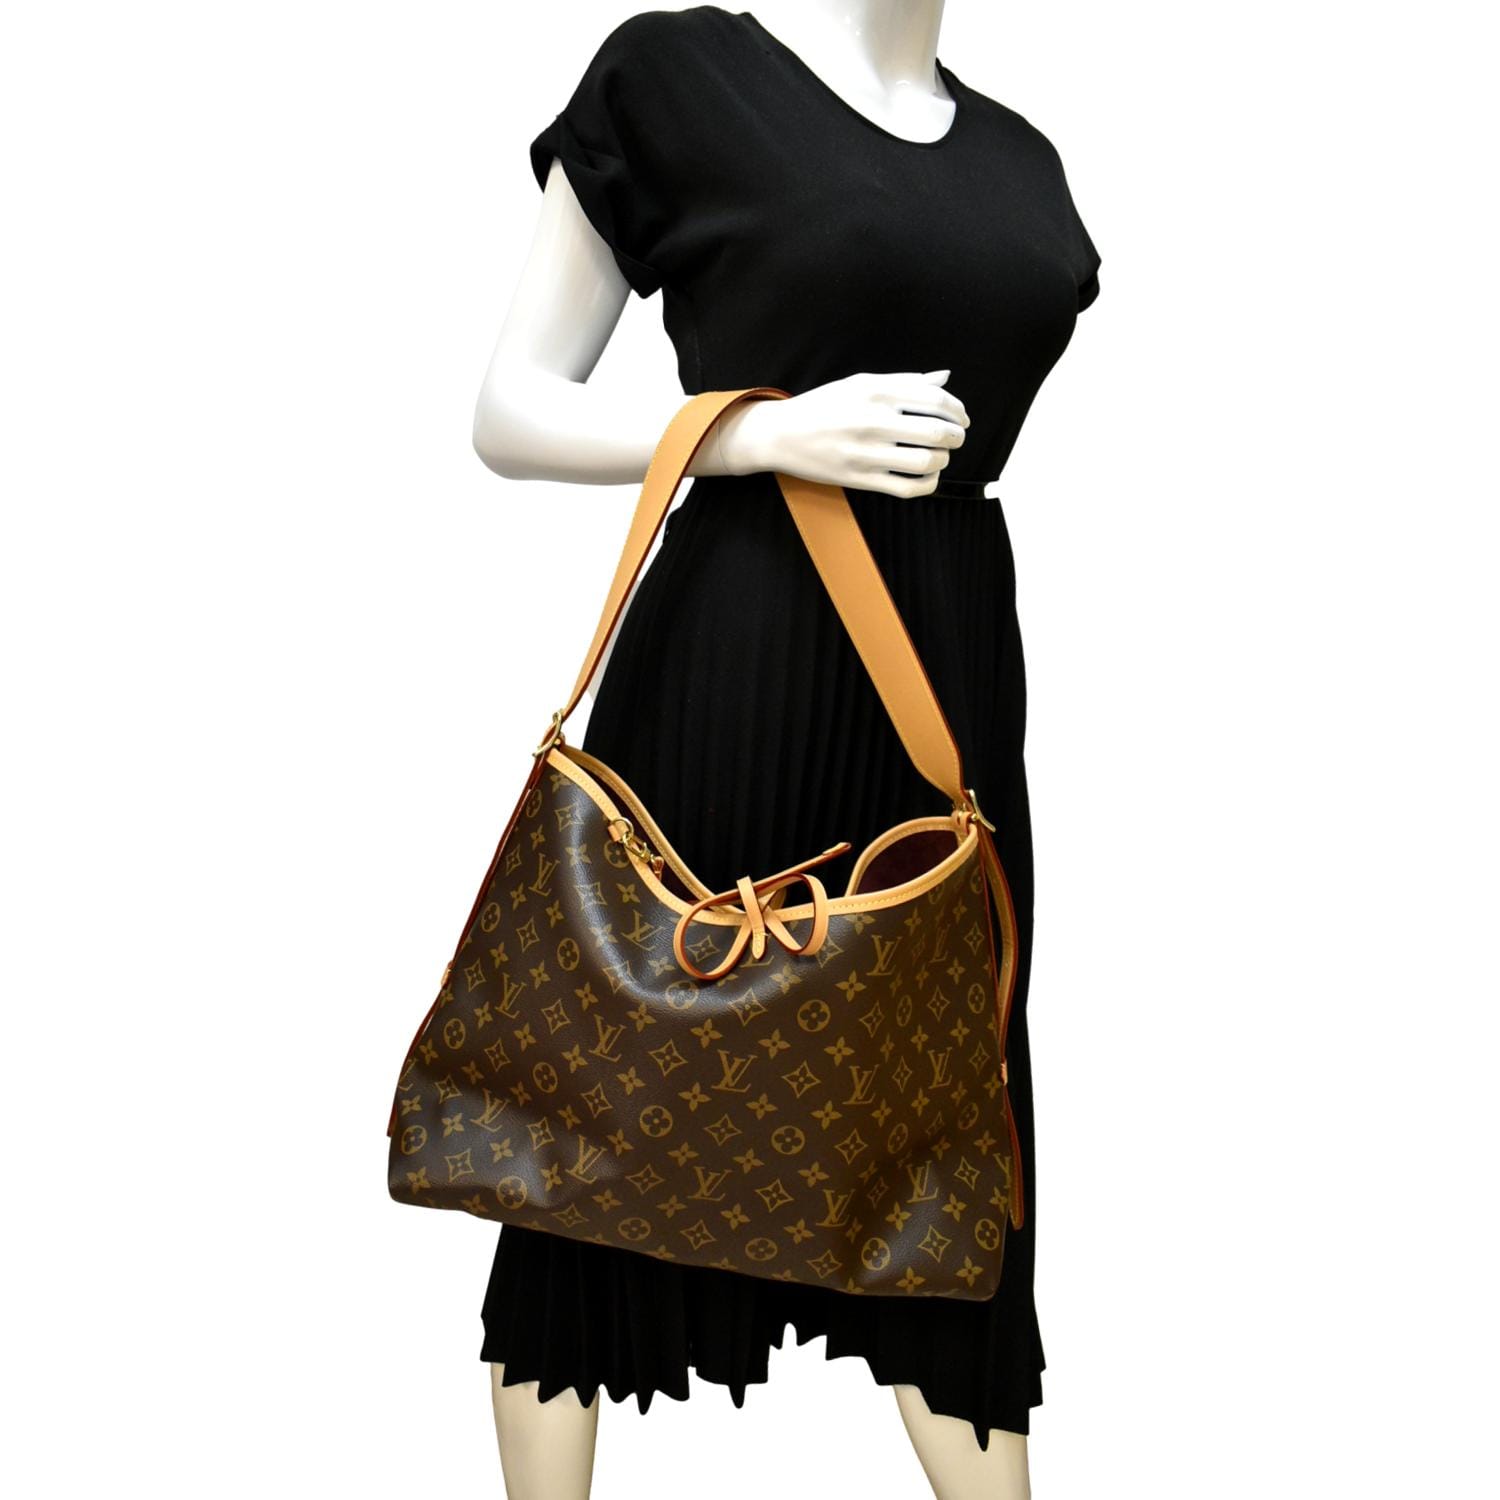 Louis Vuitton Carry All Bag, Bragmybag